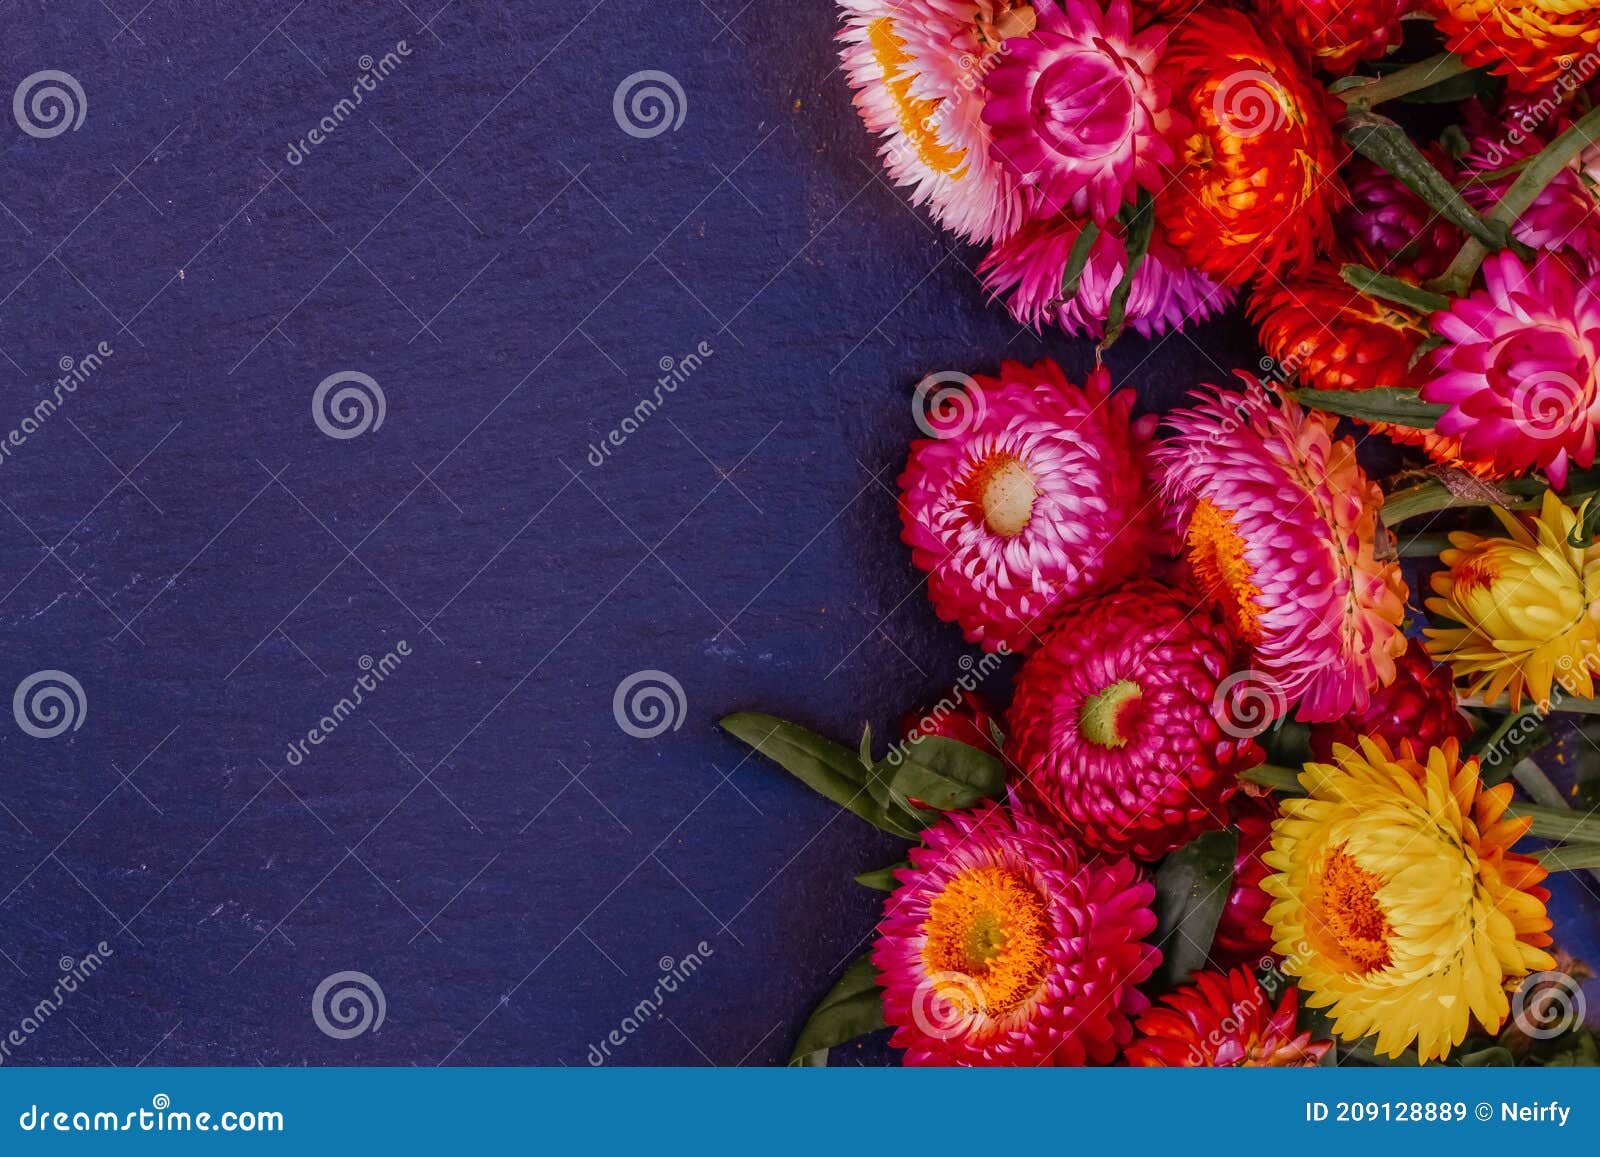 Ramo de flores eternas imagen de archivo. Imagen de fondo - 209128889